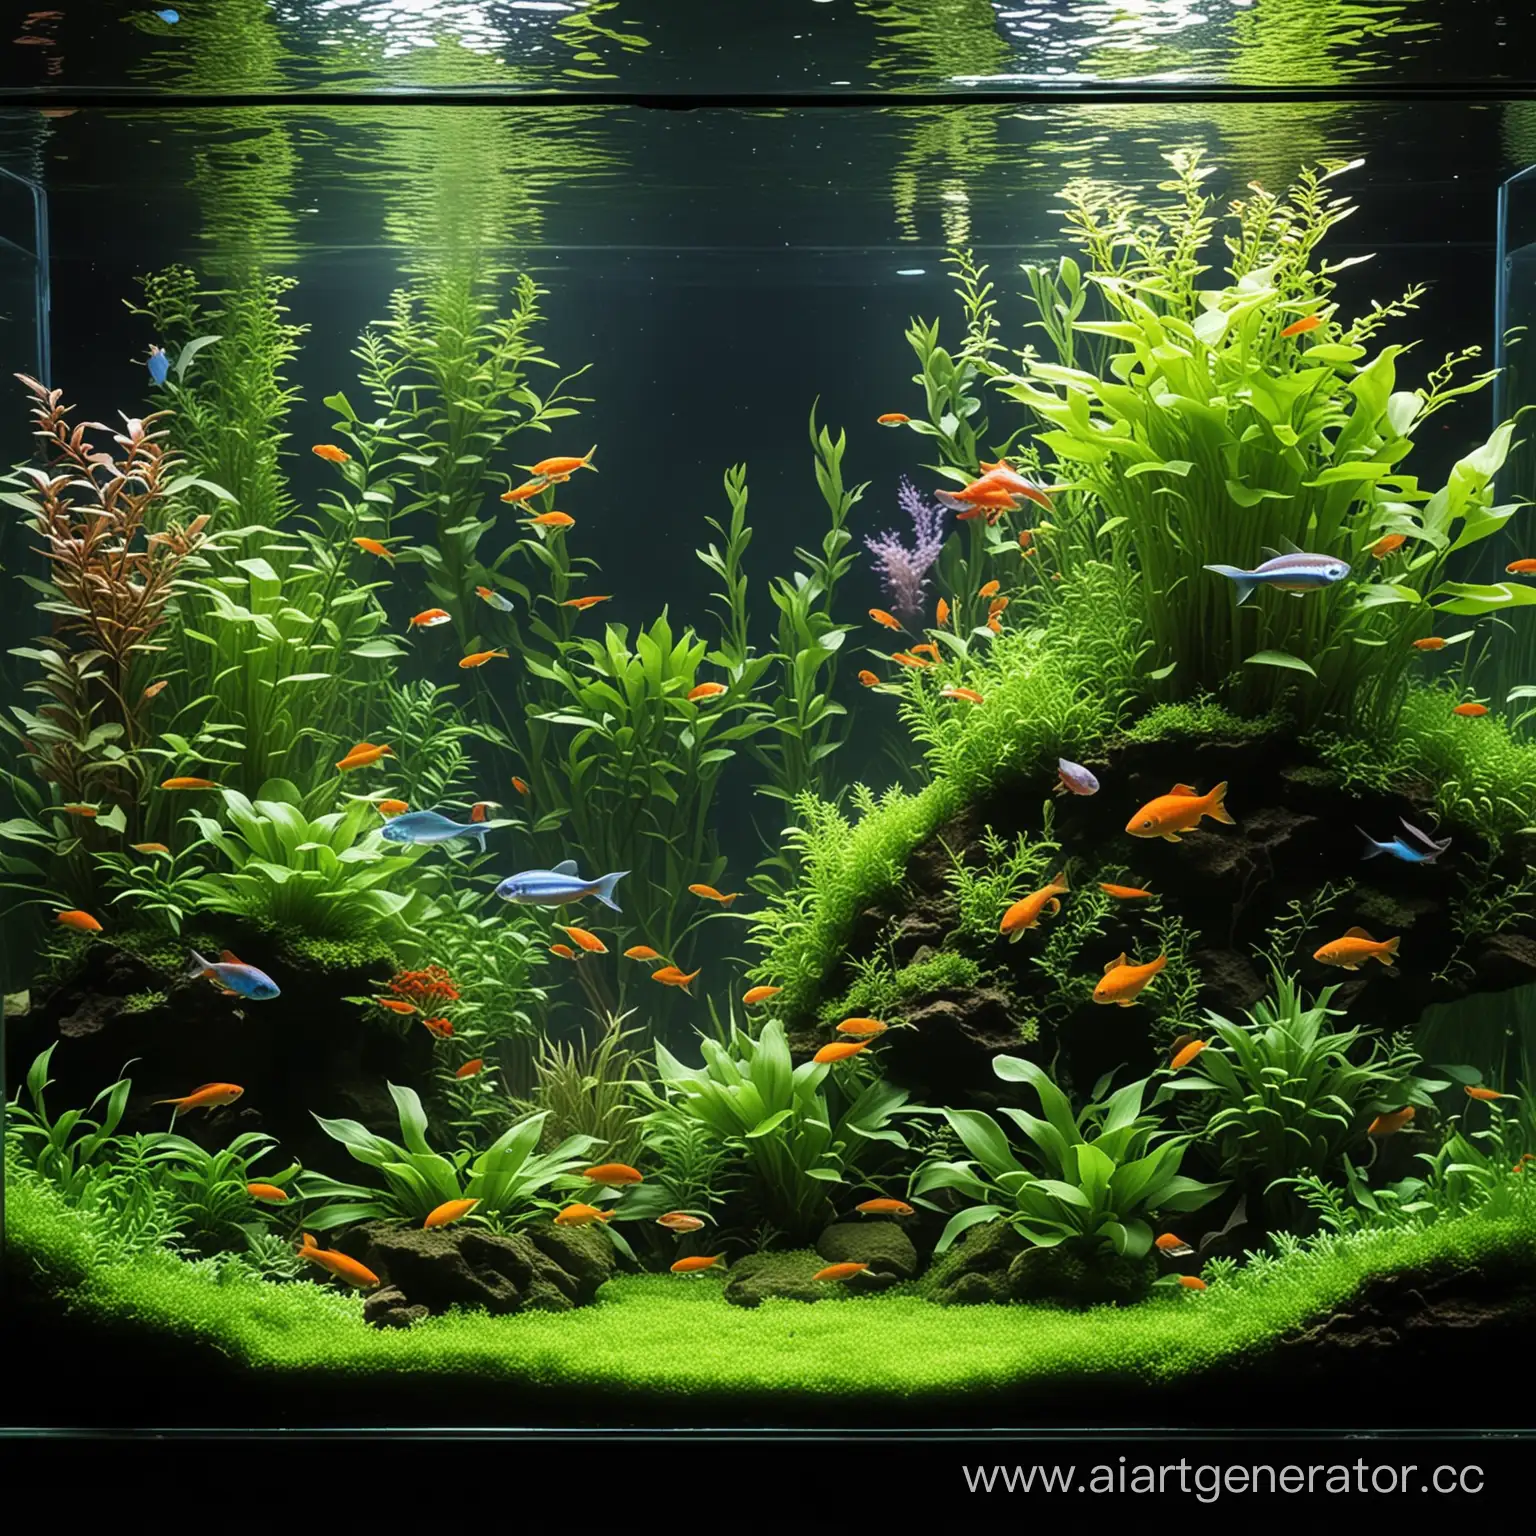 Vibrant-Aquascape-Aquarium-with-Lush-Live-Plants-and-Colorful-Fish